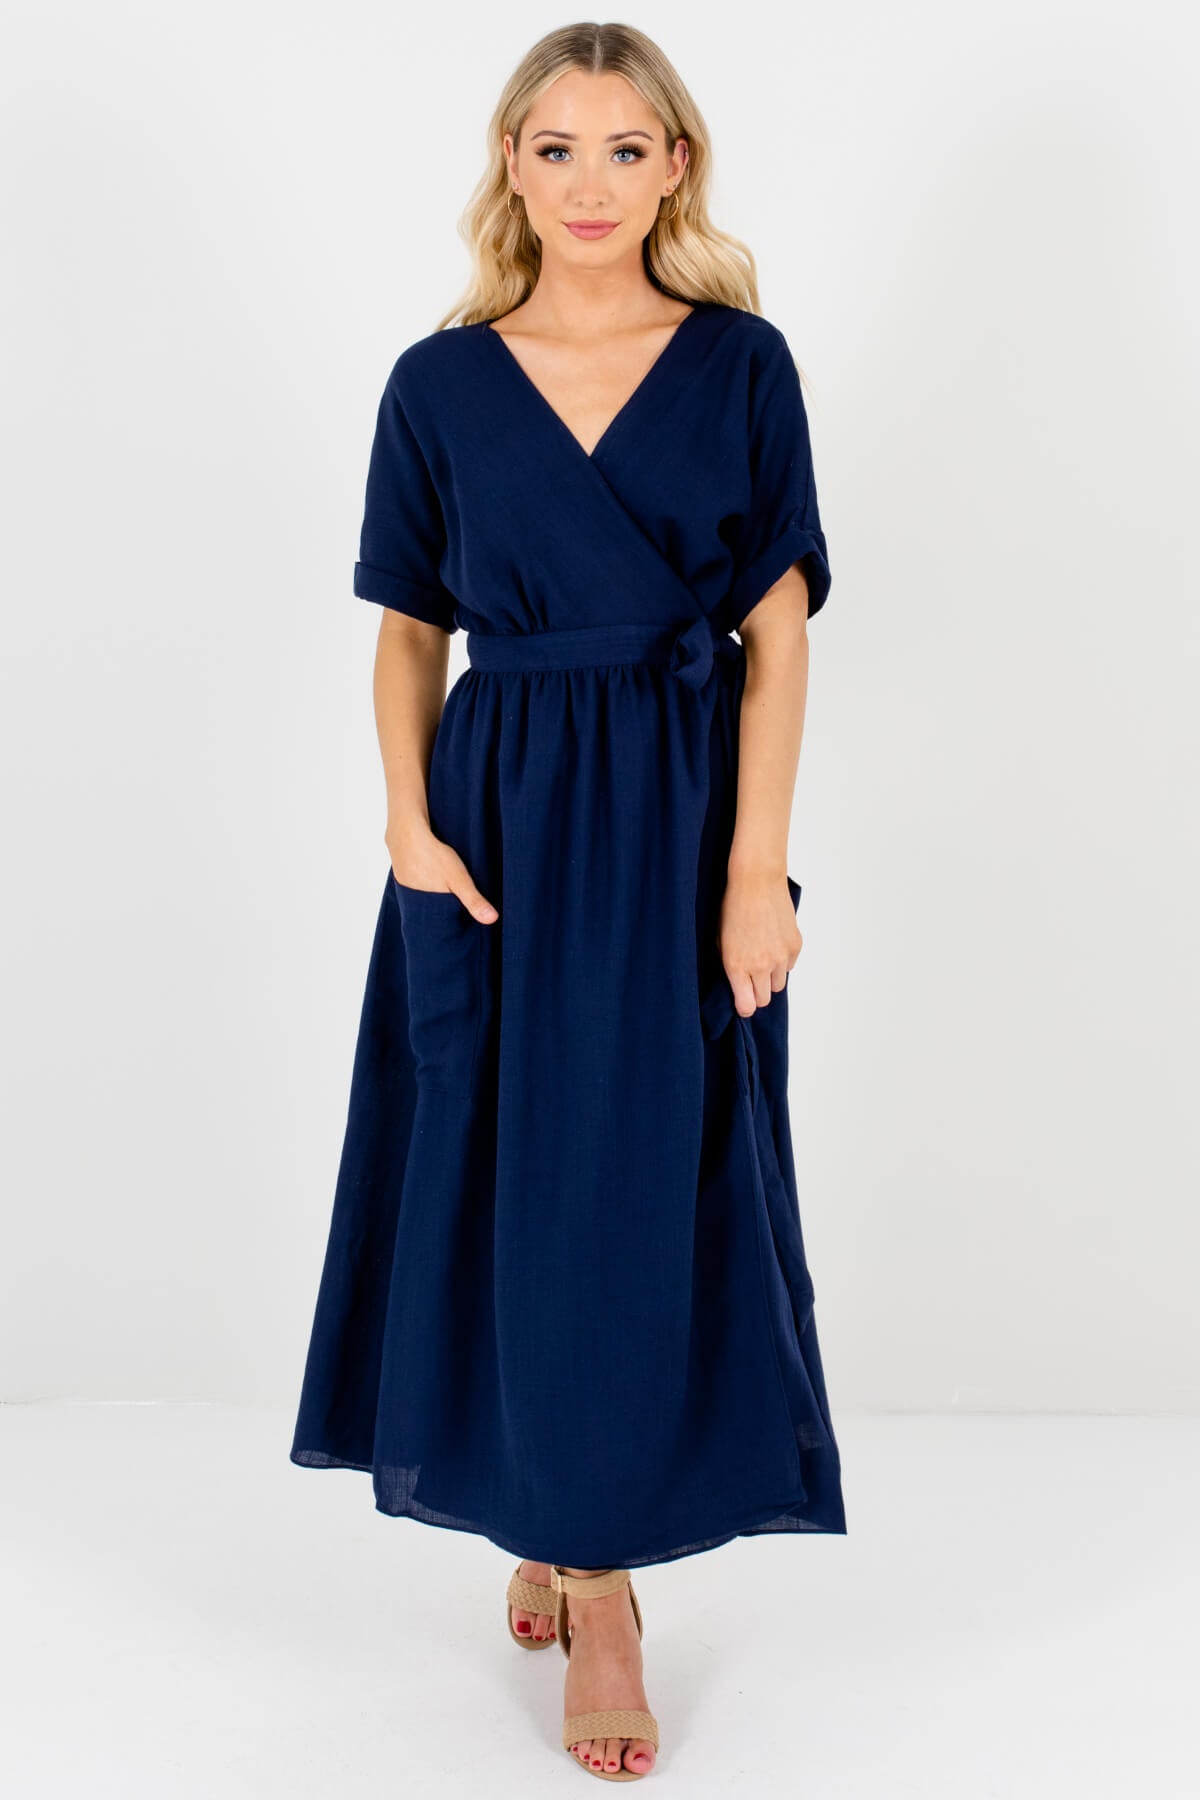 navy blue wrap dress long